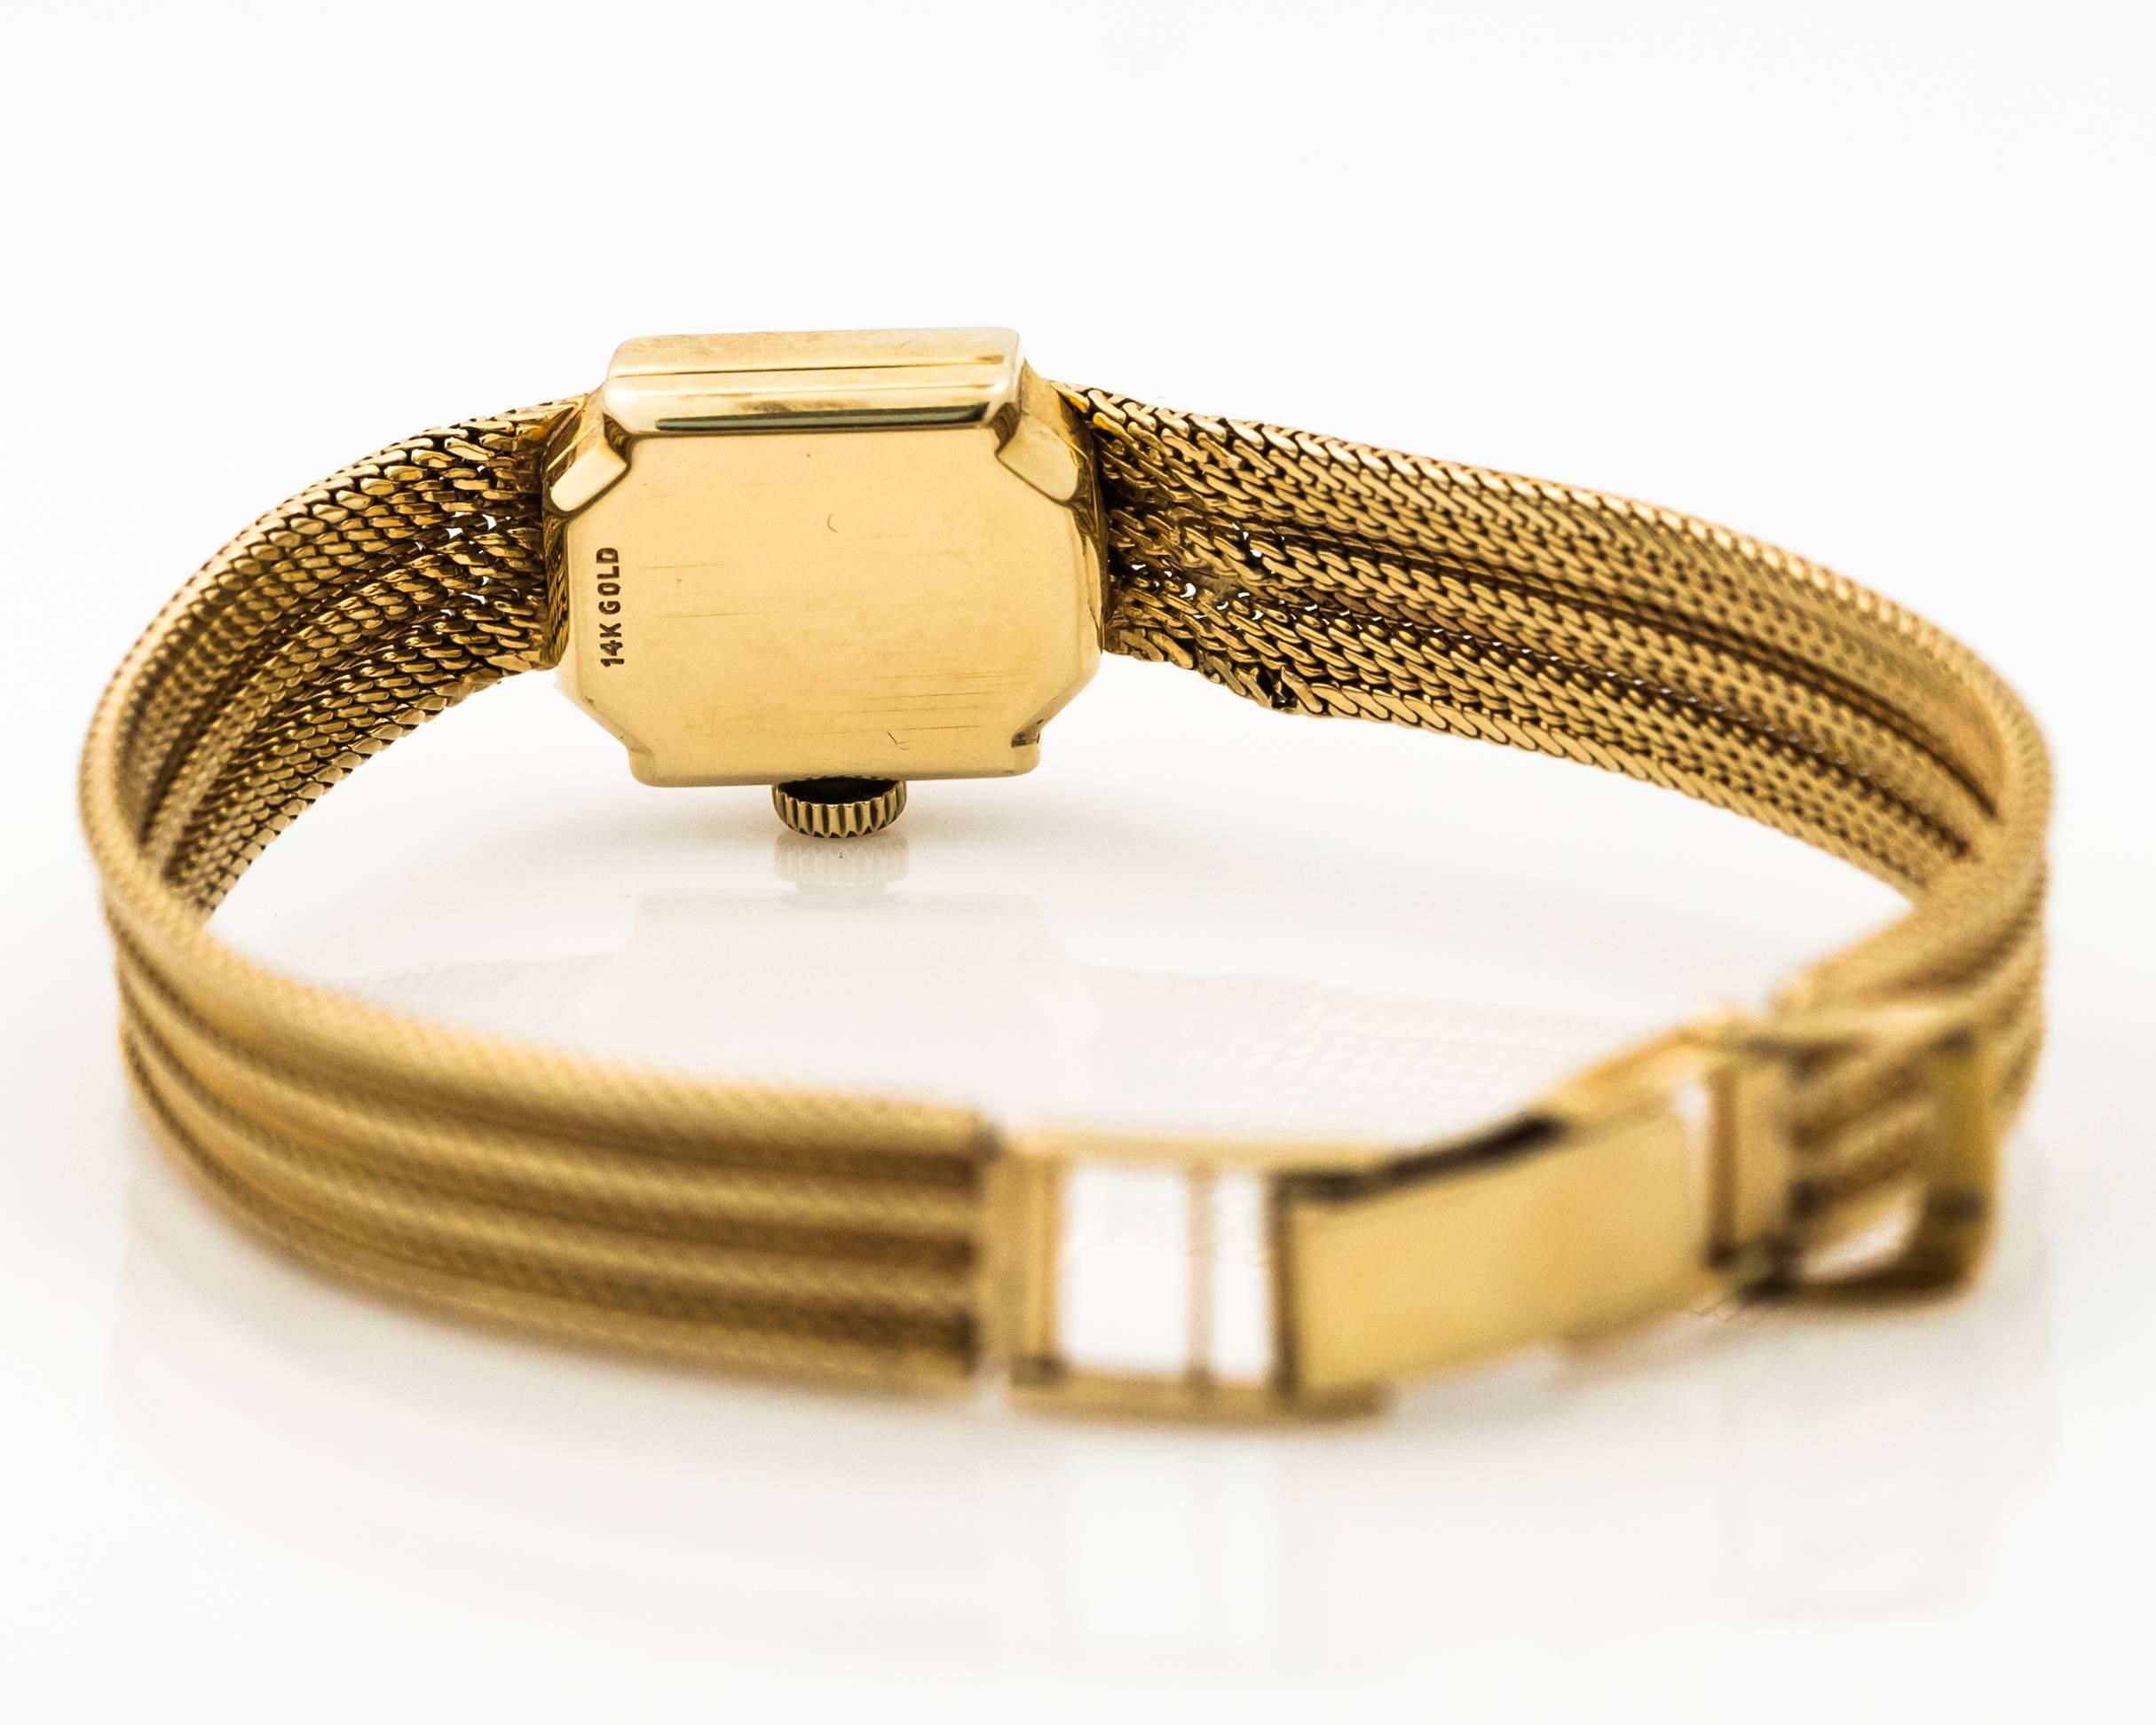 Retro 1950s Rolex 14K Yellow Gold Ladies Wrist Watch